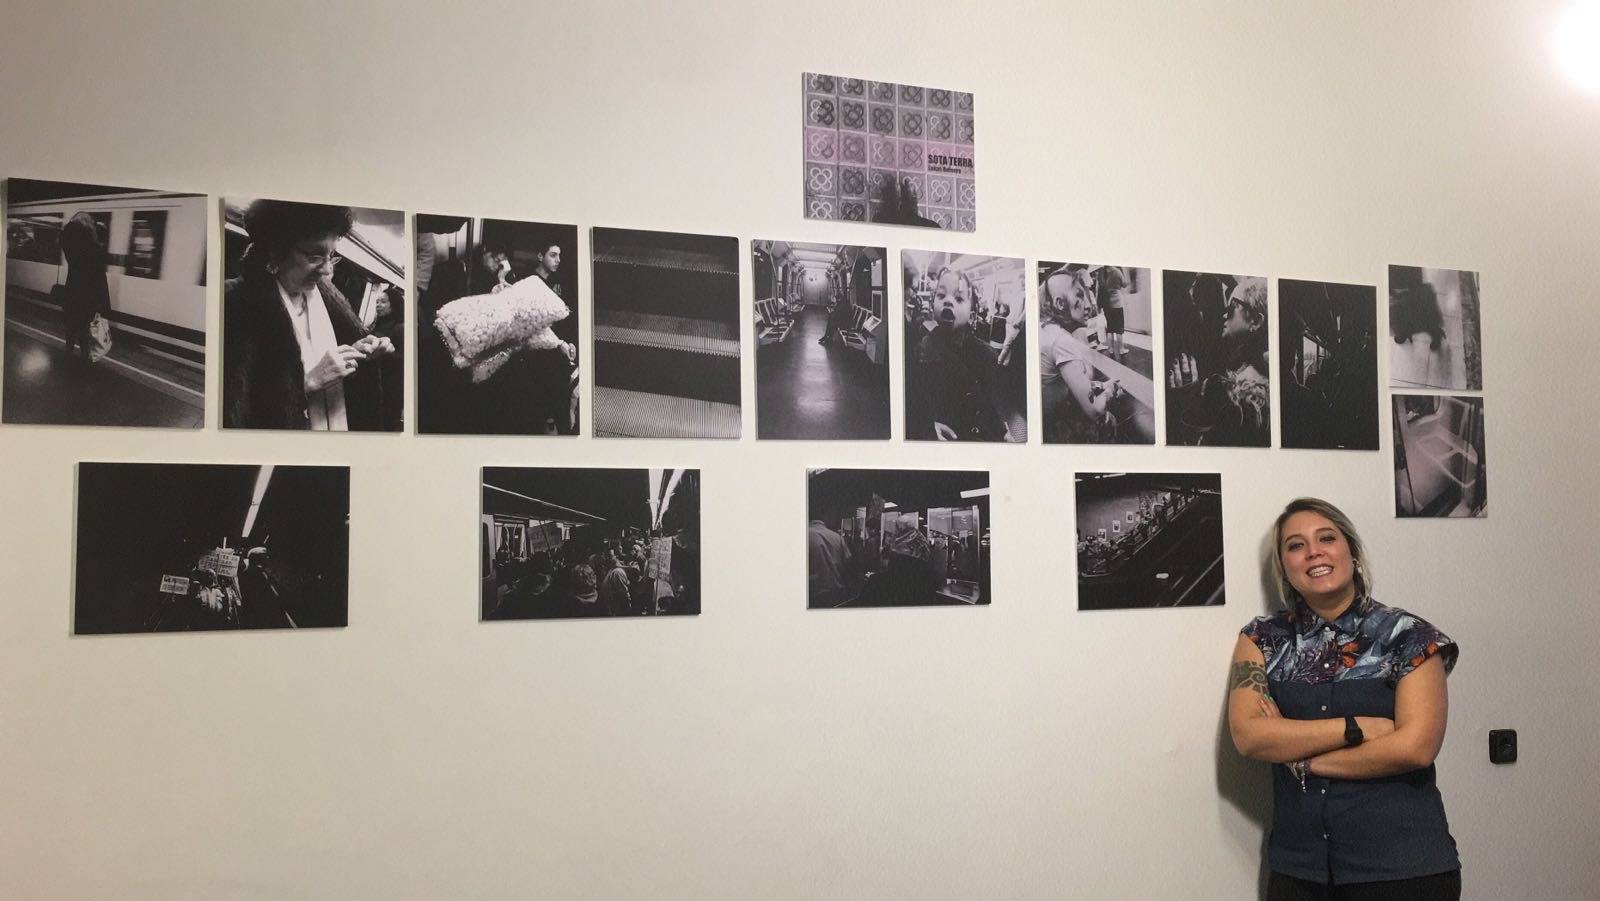 Algunes de les fotografies fetes al metro de Barcelona que exposa Lukas Romero